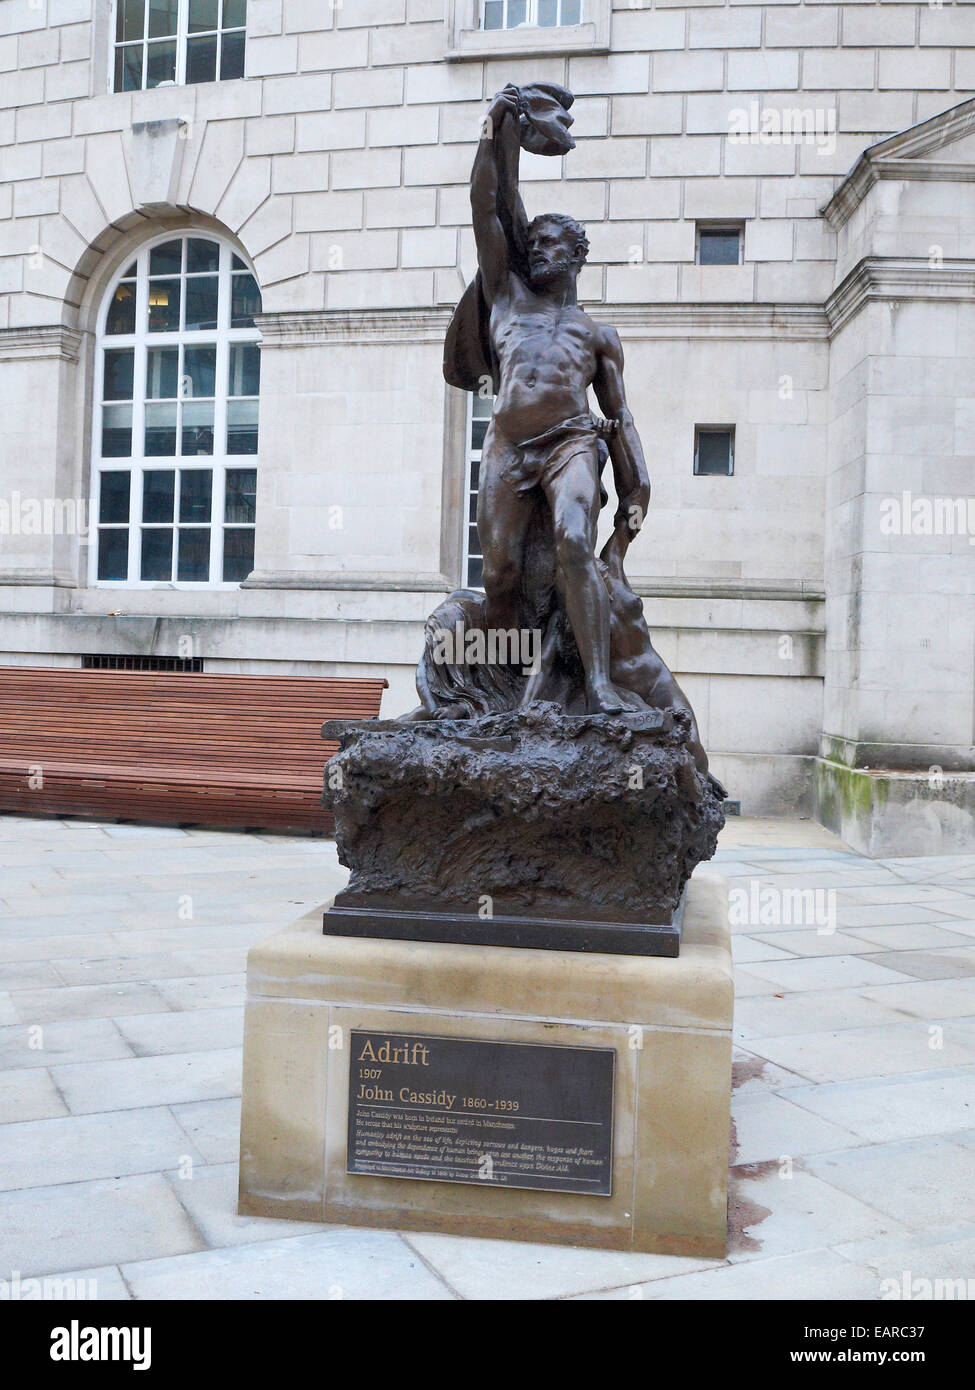 Adrift statue by John Cassidy in Peter Street Manchester UK Stock Photo